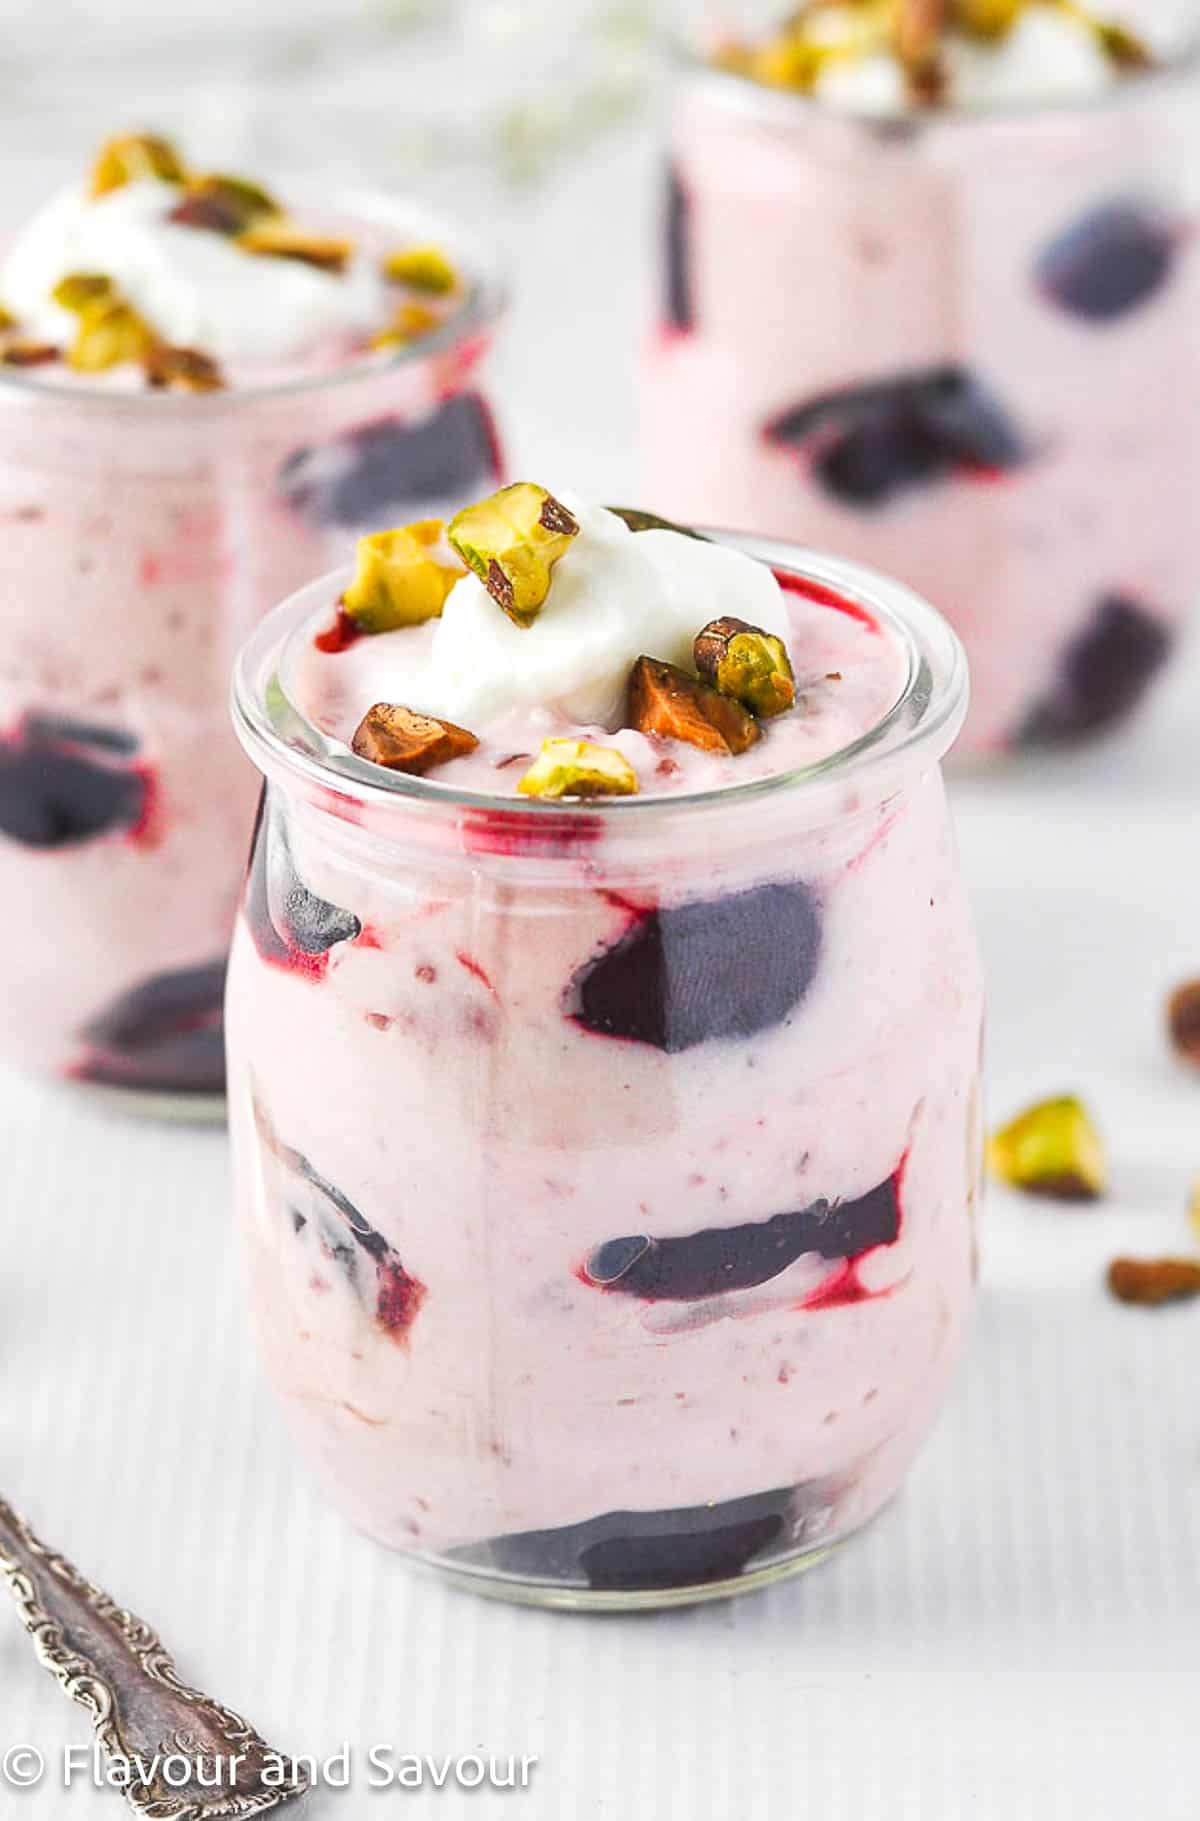 Cherry fool dessert made with Greek yogurt and cherries in a small dessert glass.